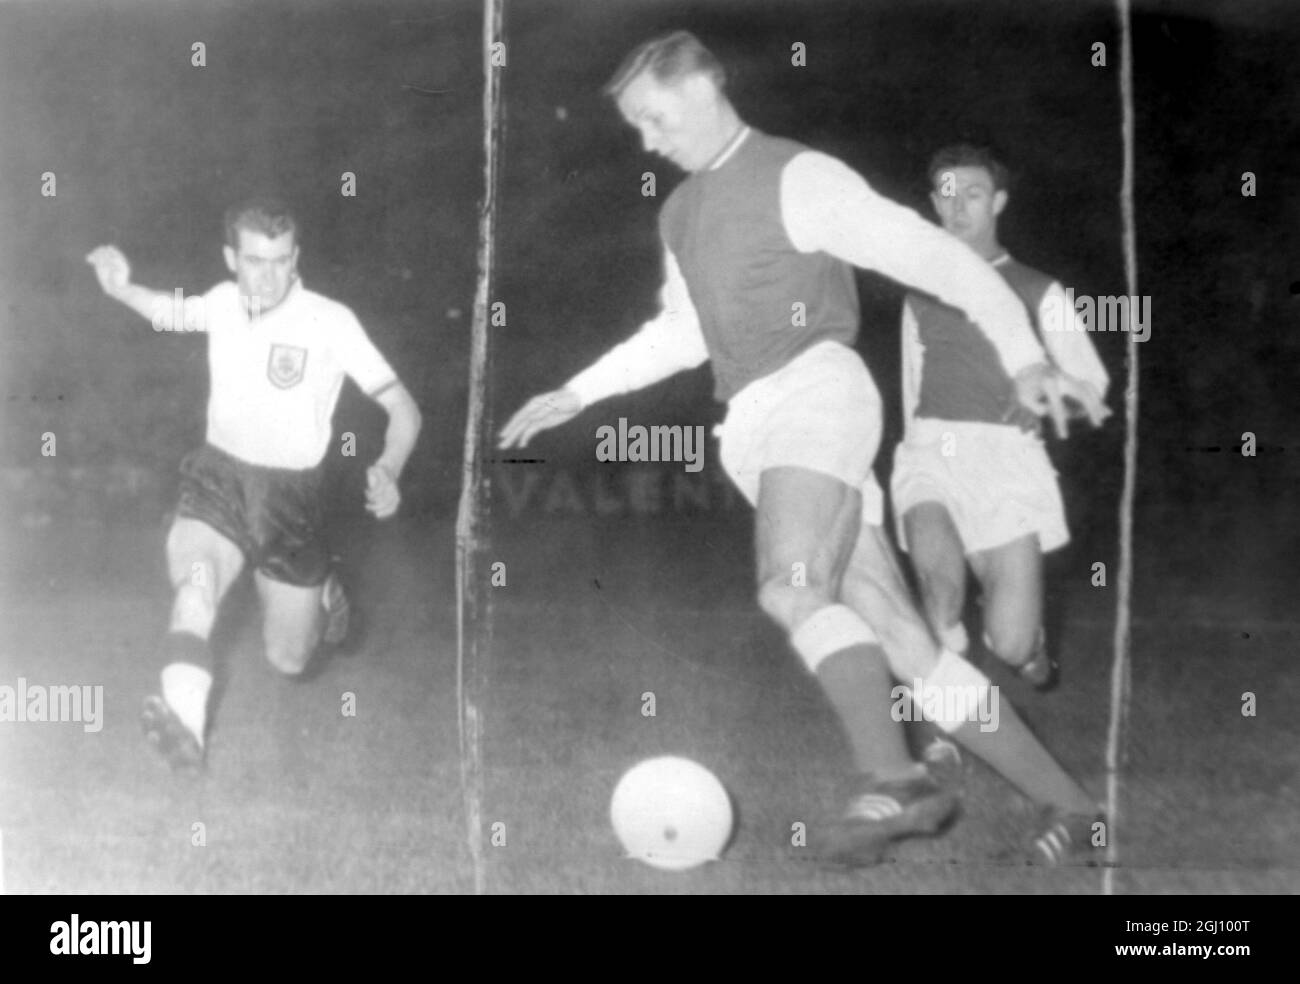 FOOTBALL BURNLEY V REIMS CONELLY FÜHRT ANGRIFF AM 30. NOVEMBER 1960 Stockfoto